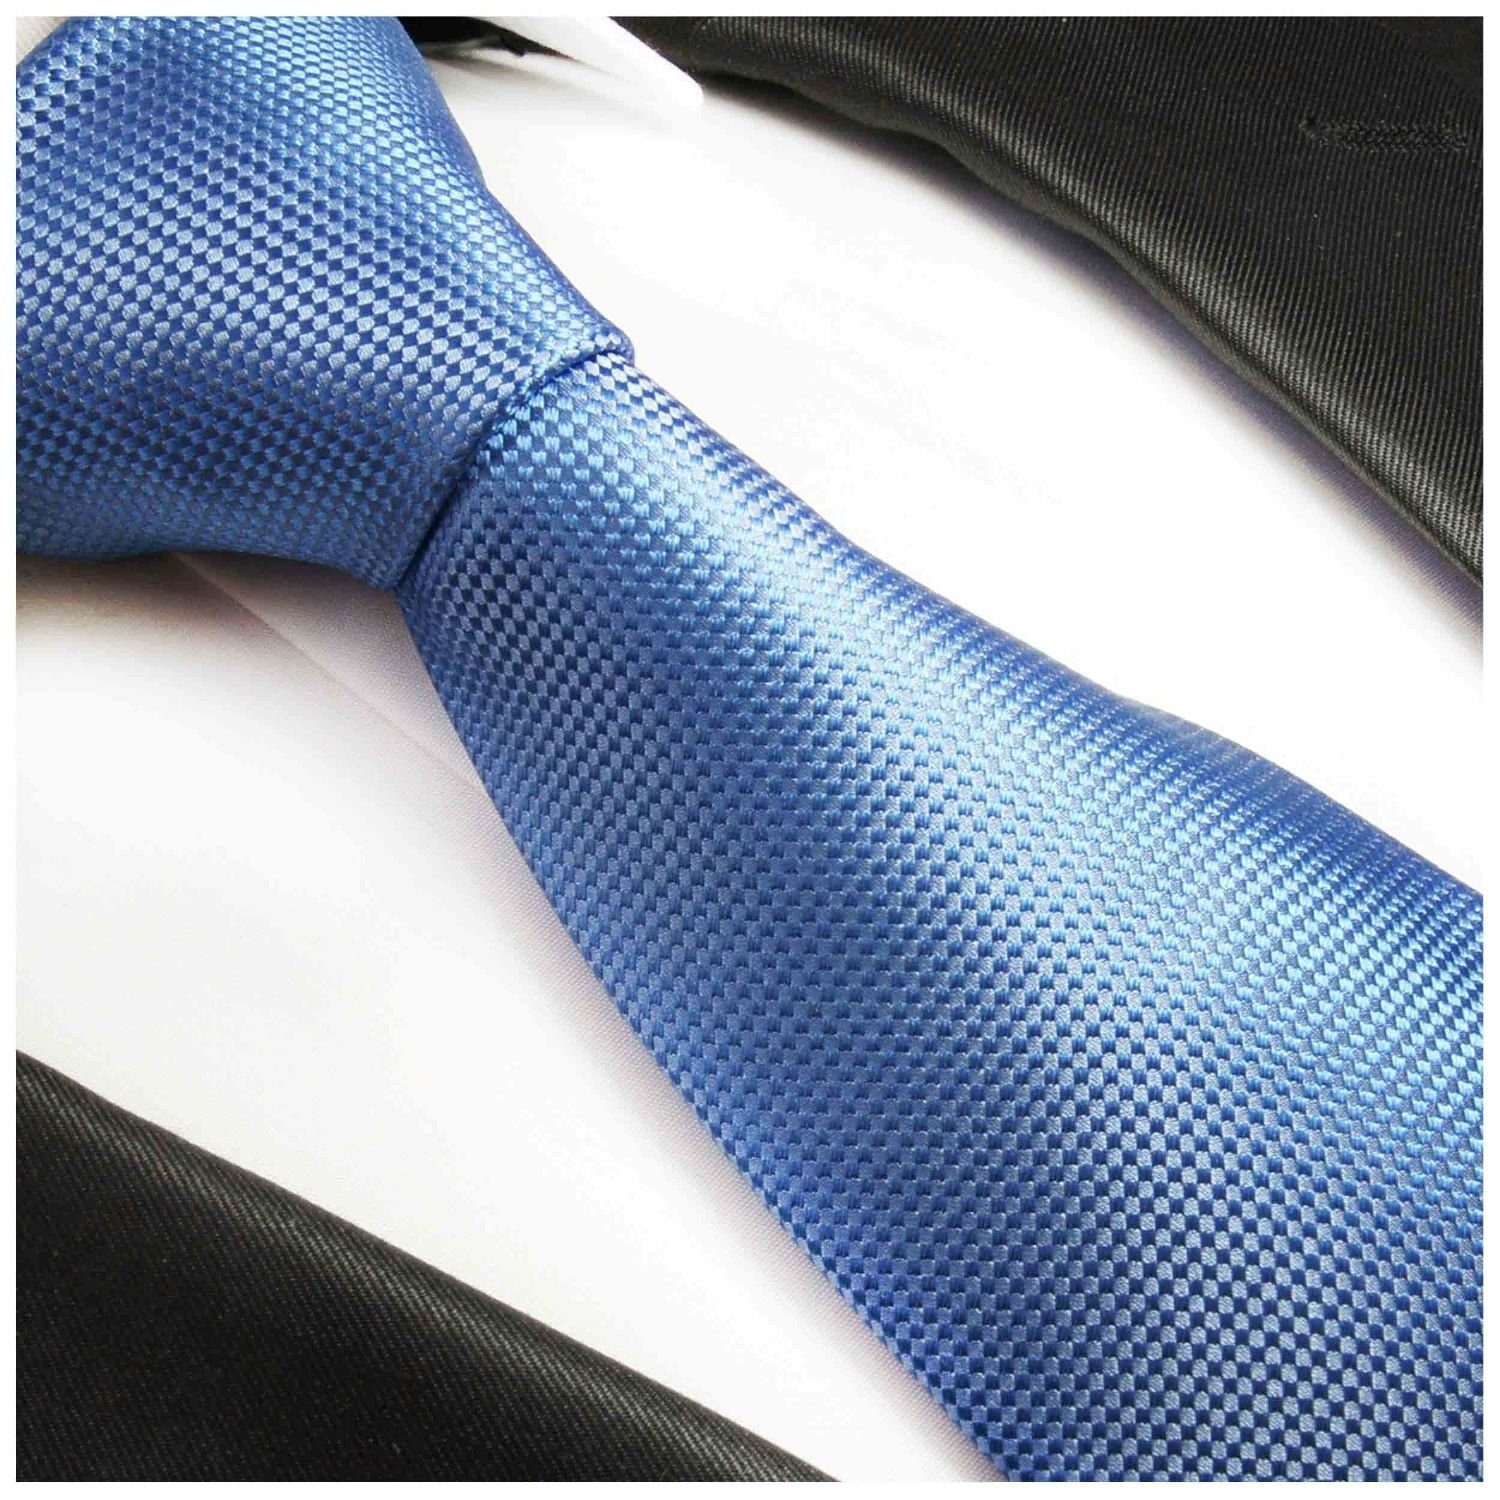 Paul Malone Krawatte Schlips Schmal Seide Seidenkrawatte Designer modern blau uni Herren (6cm), 100% 898